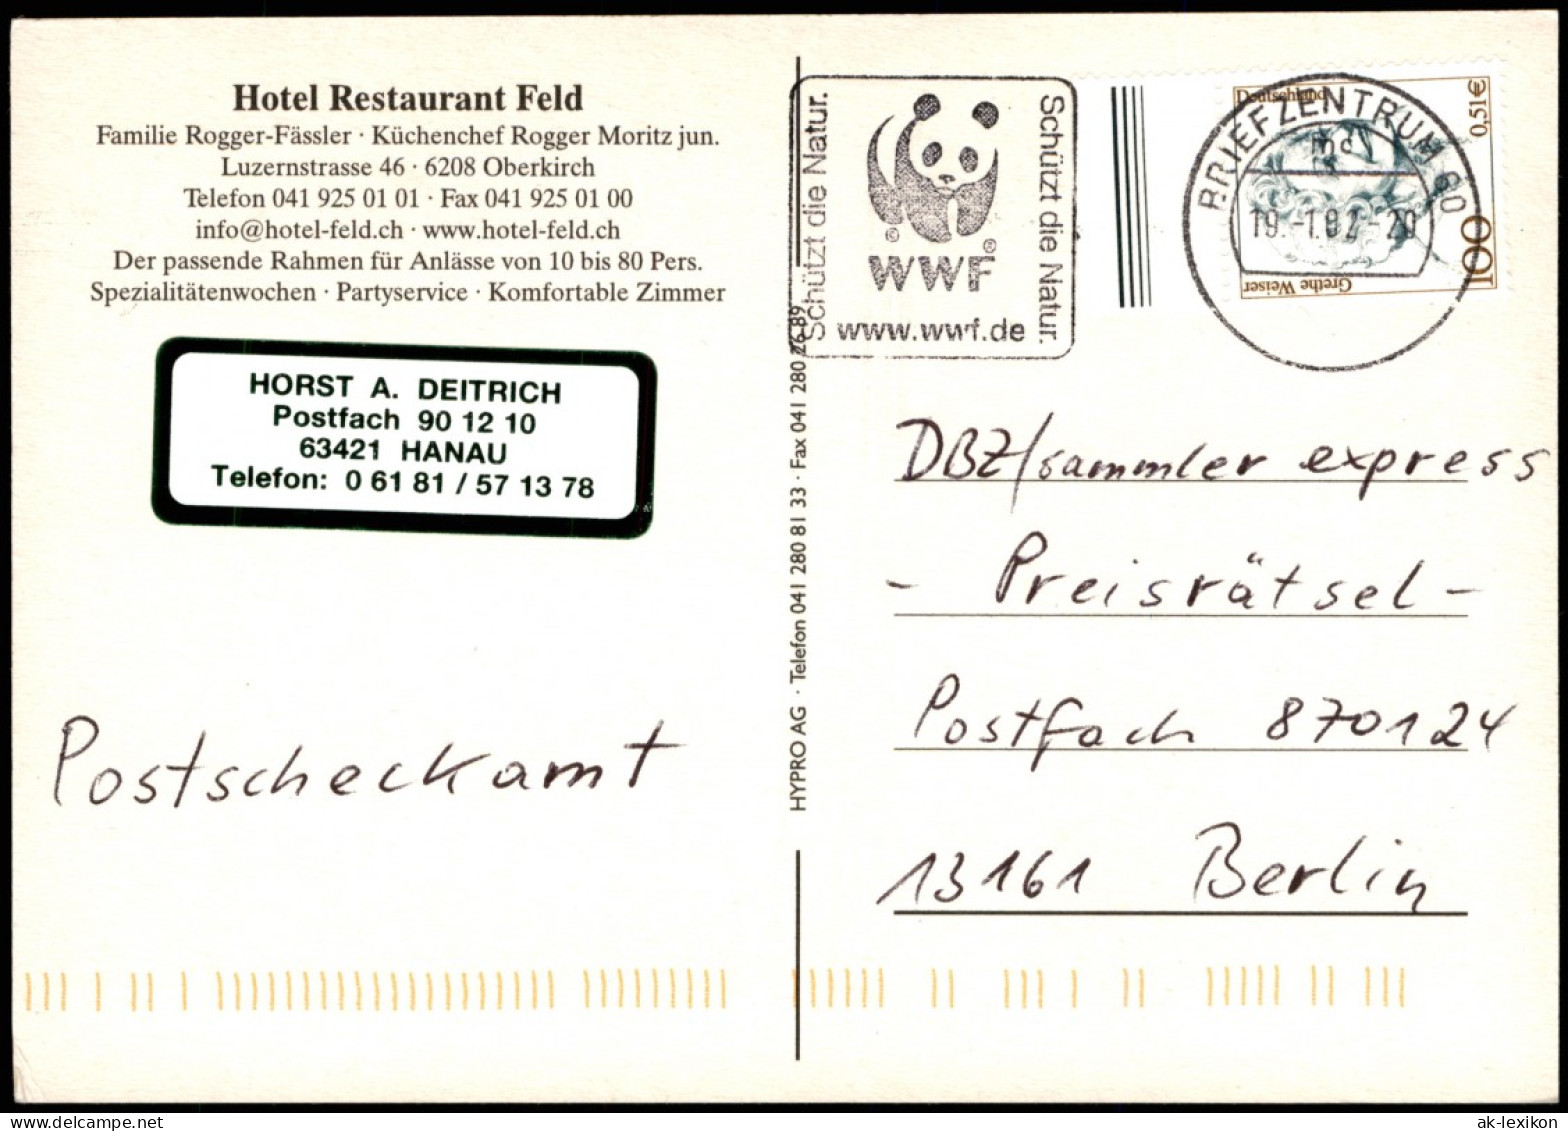 Ansichtskarte Oberkirch (Baden) Hotel Restaurant Feld 1992 - Oberkirch